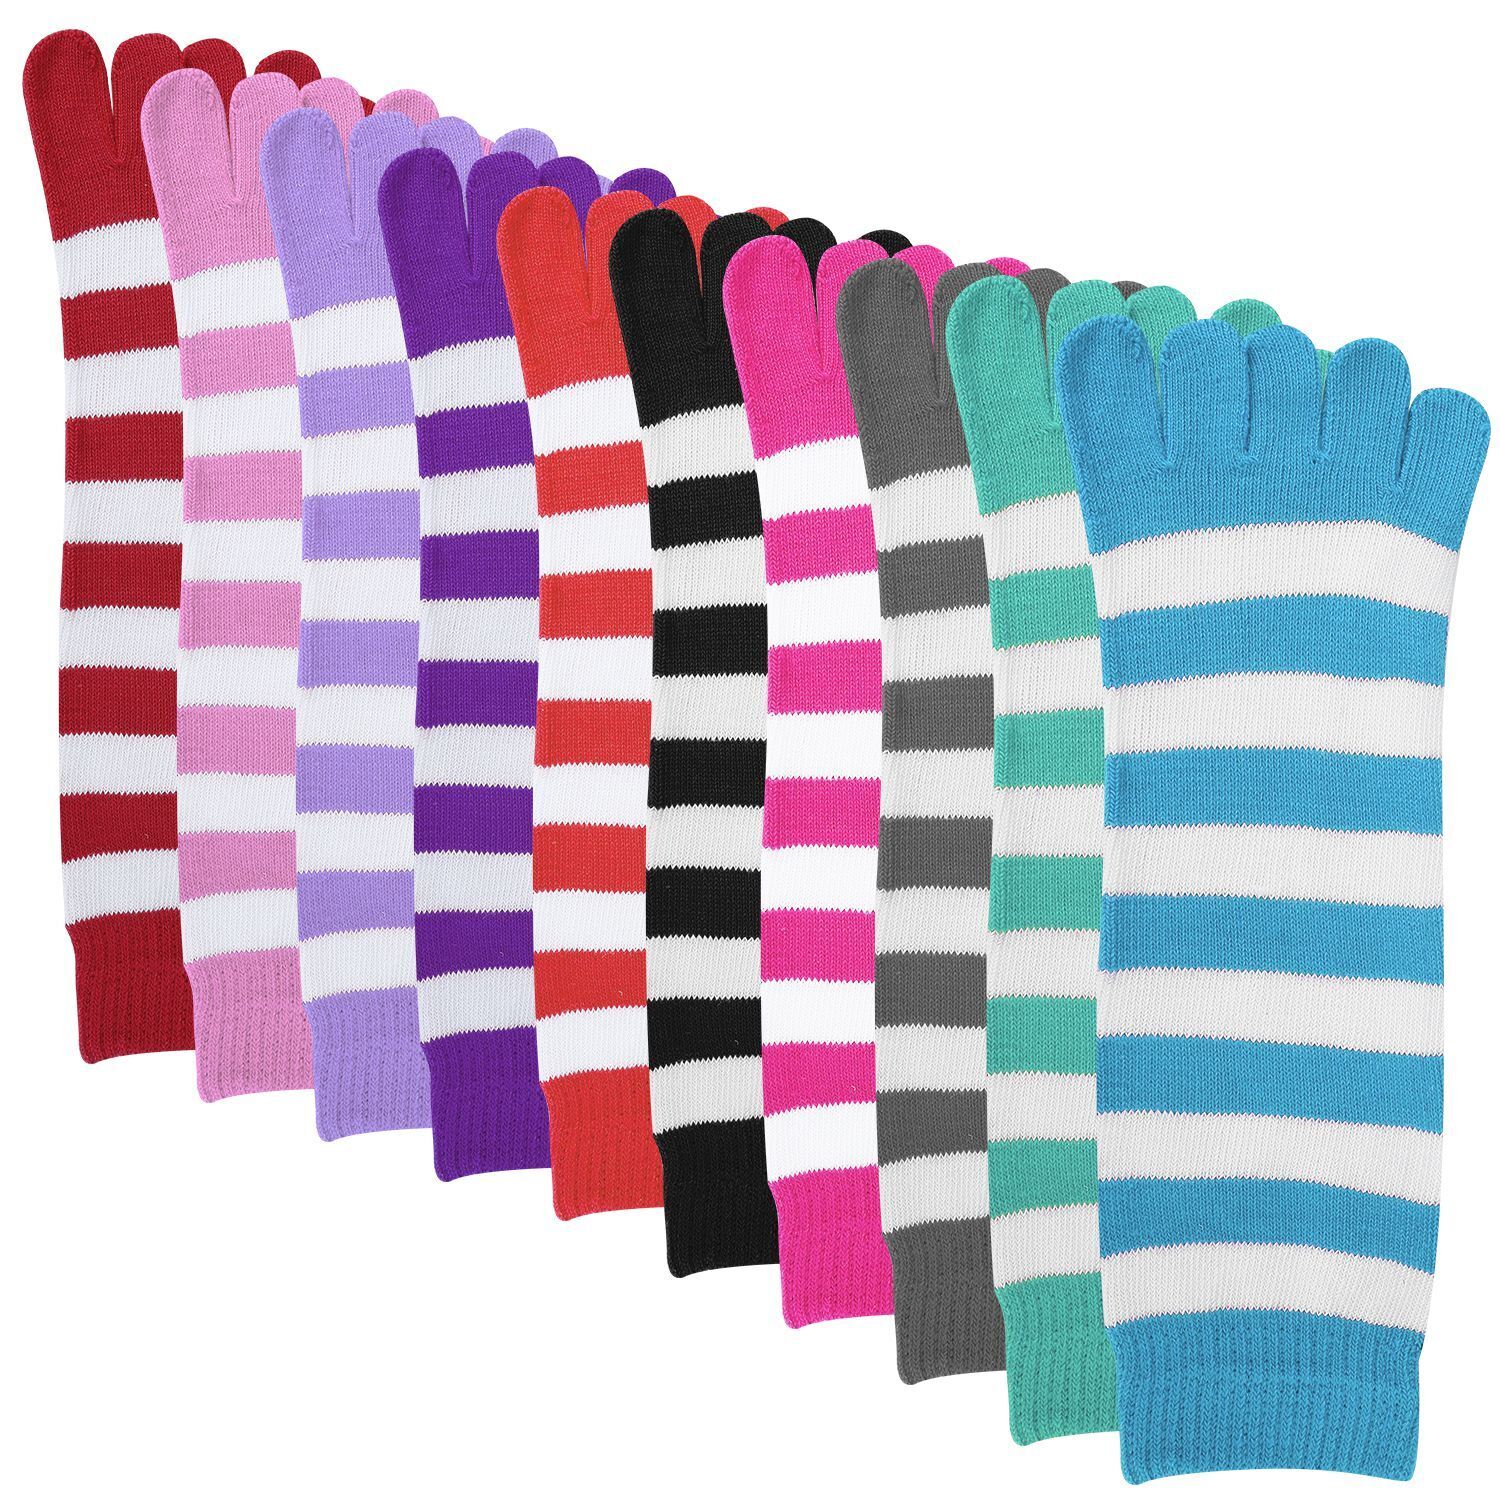 6 Pairs 5-Toes Warm Toe Socks Soft Breathable Ankle Athletic Fashion Socks Women N‘POLAR Does not apply - фотография #3